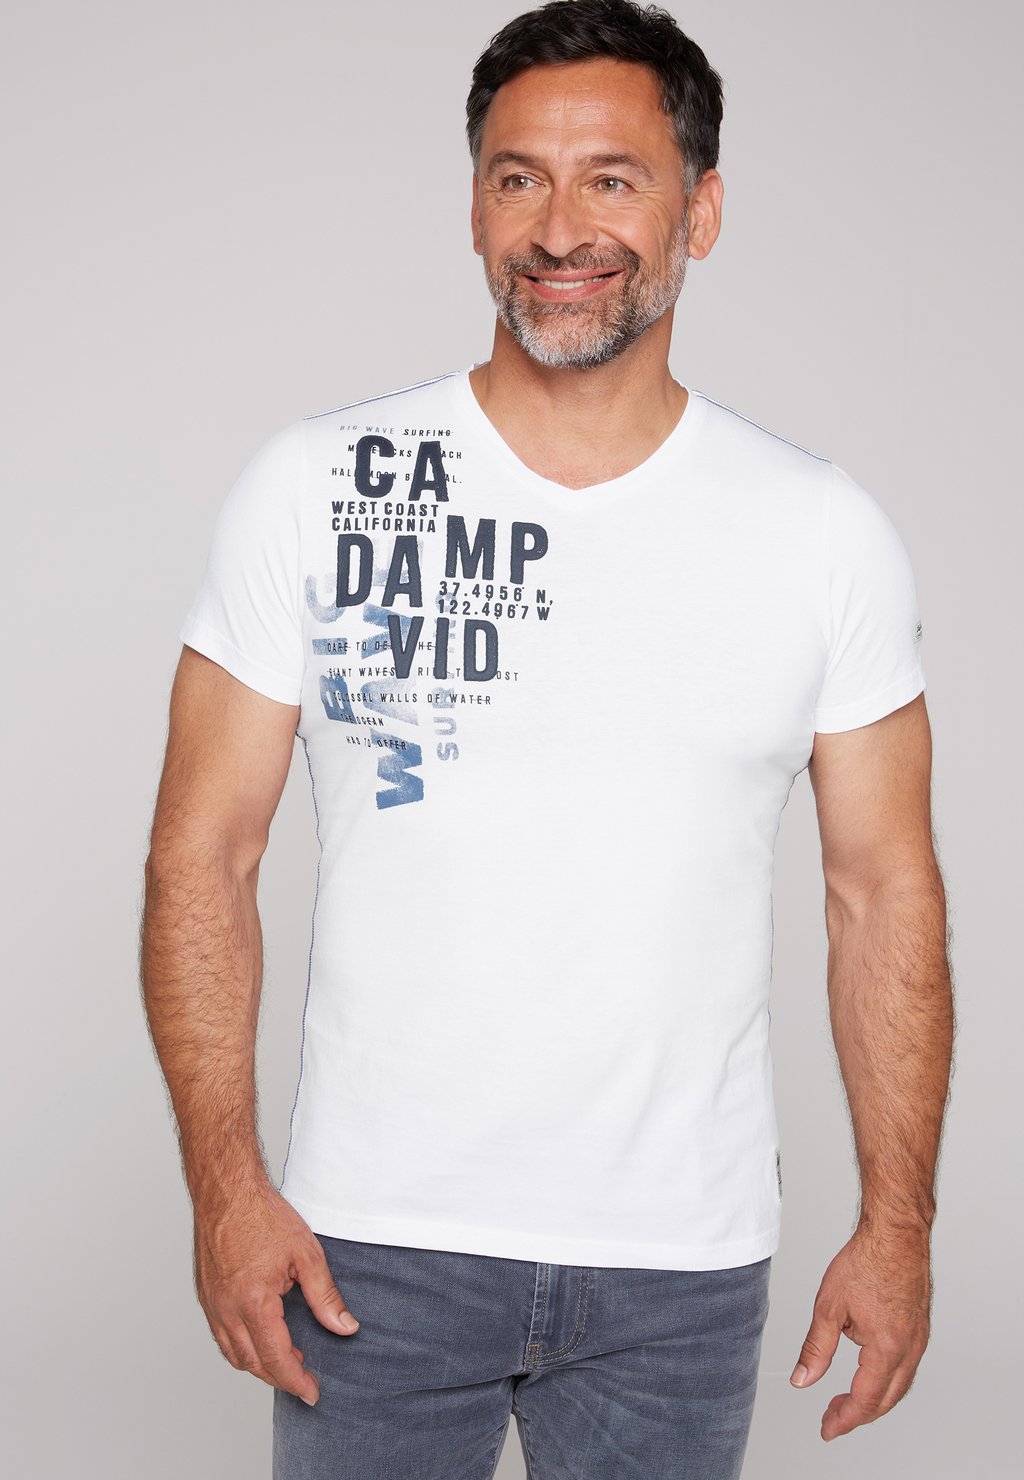 футболка базовая v neck mit lammgarnstruktur camp david цвет sea green Футболка с принтом MIT V-NECK UND LABEL PRINTS Camp David, цвет opticwhite